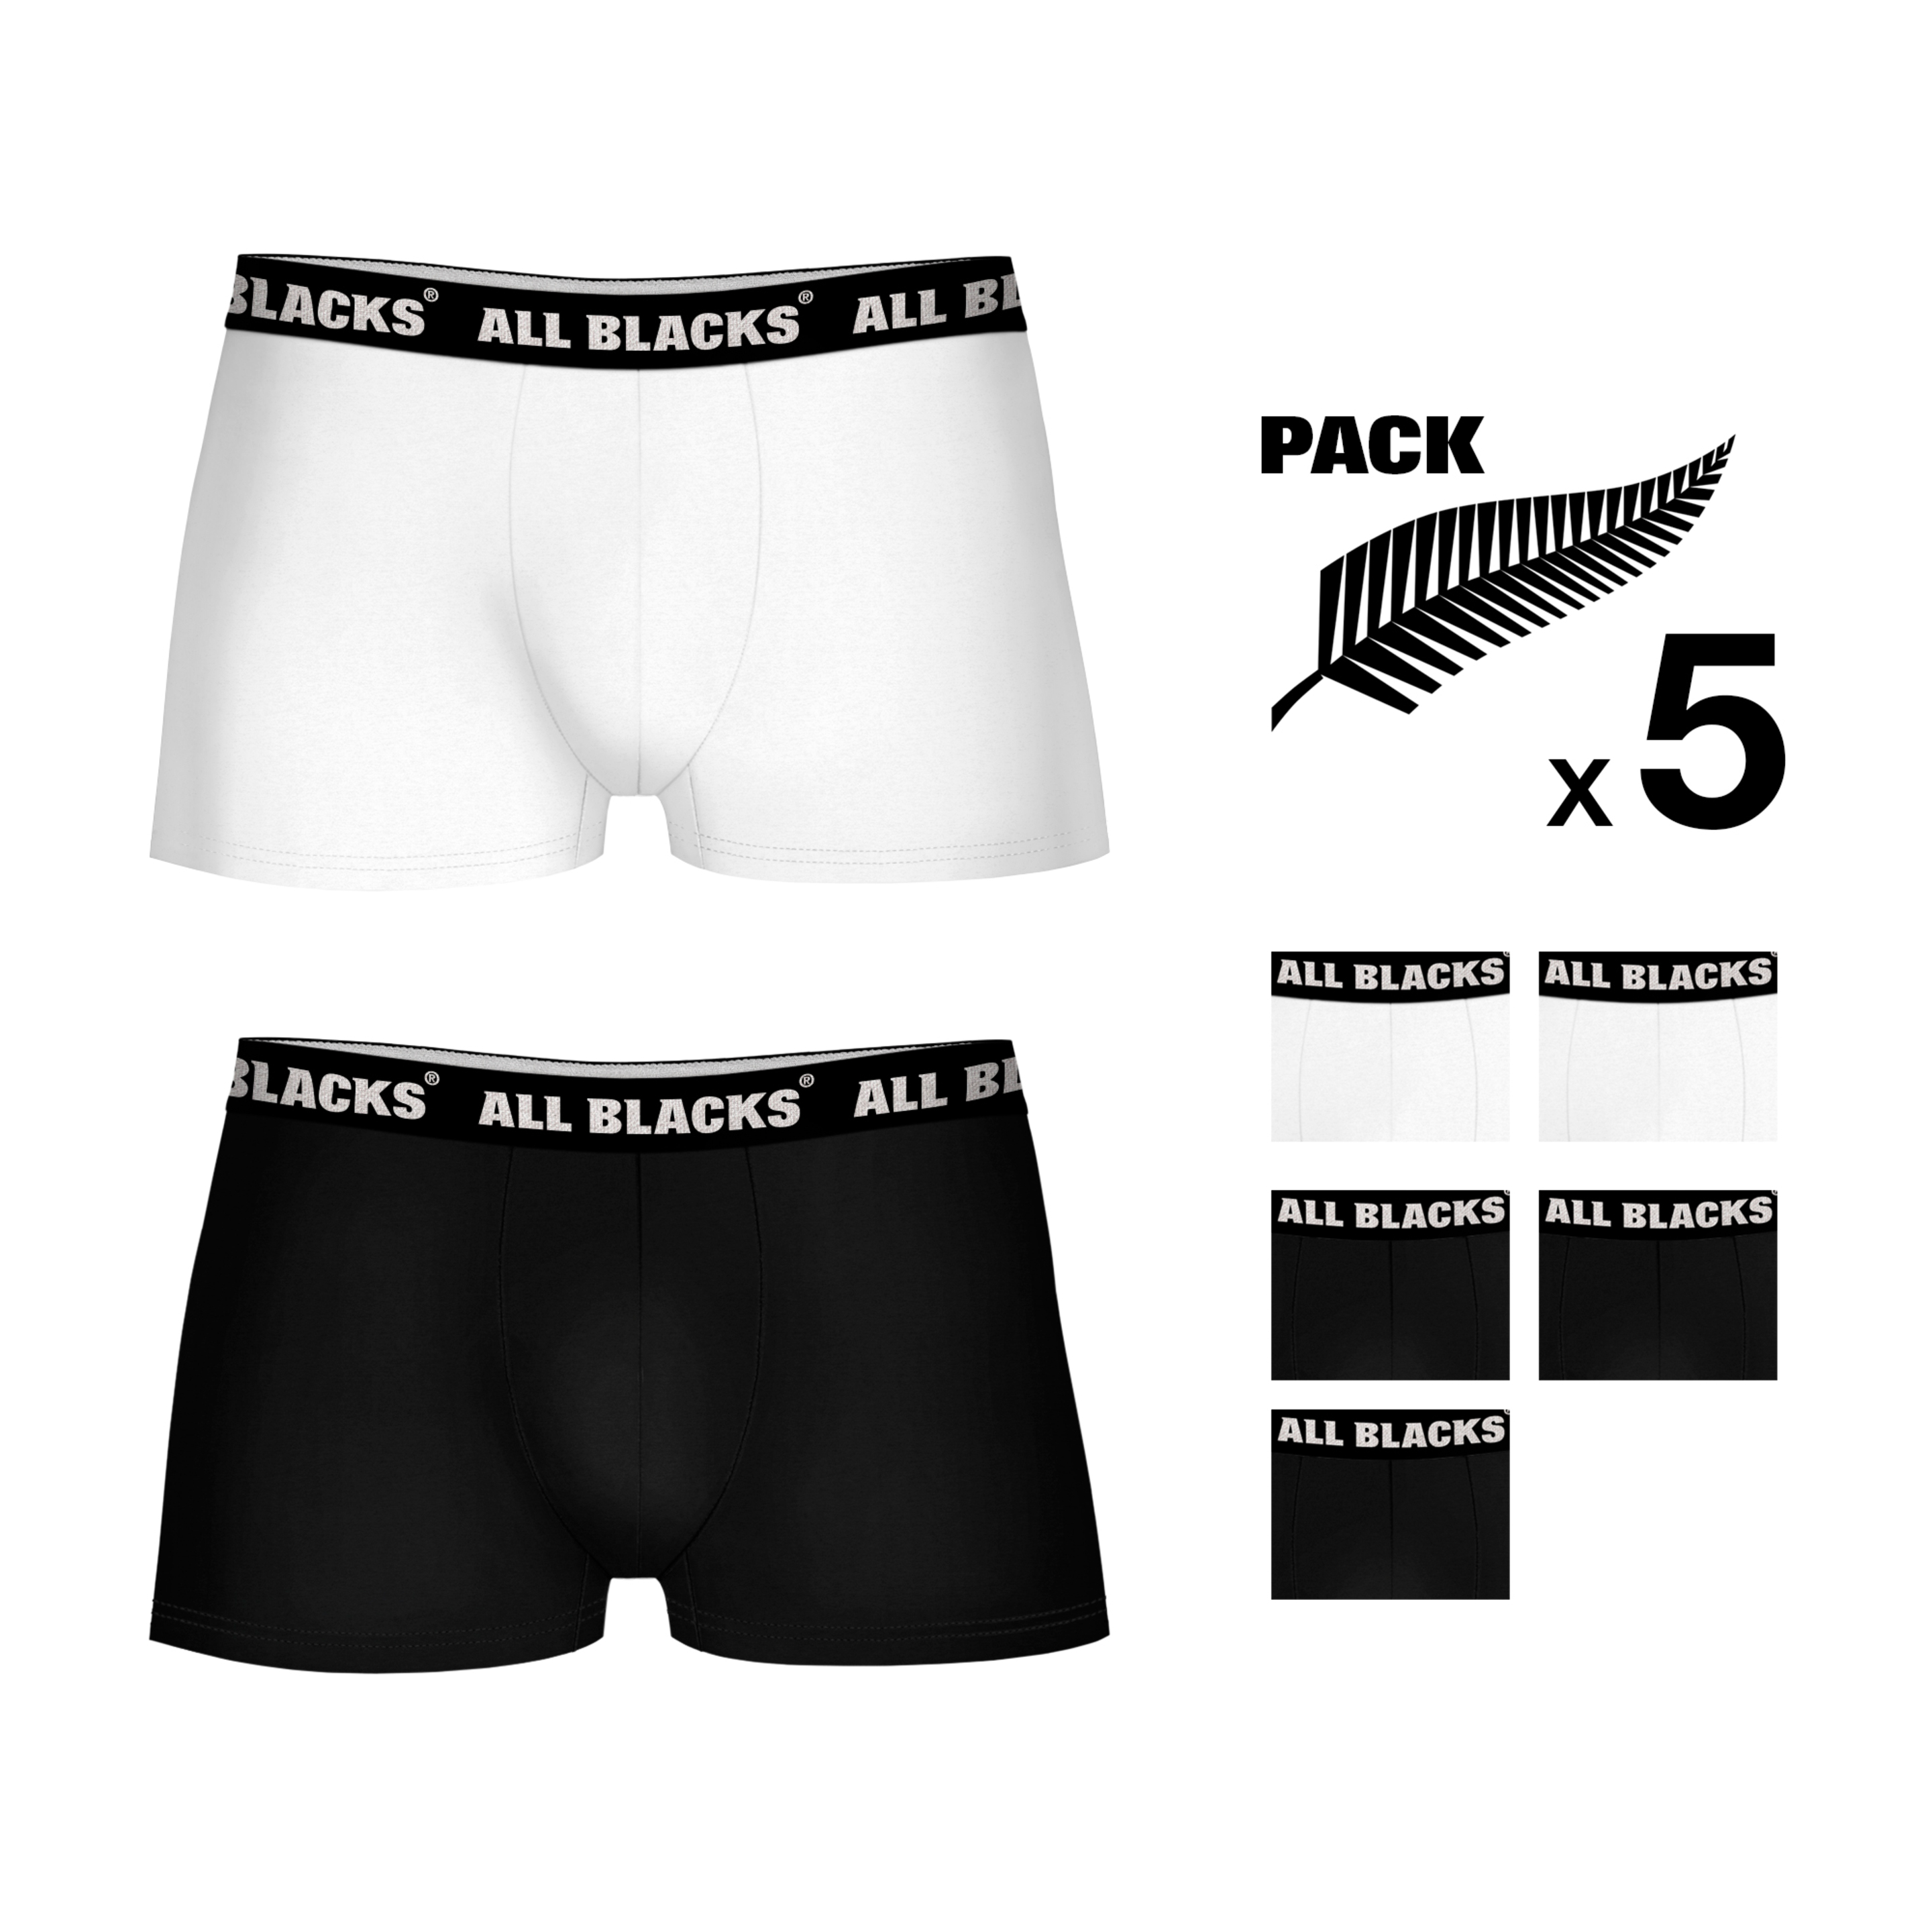 Calzoncillos Boxer All Blacks (Pack 5)